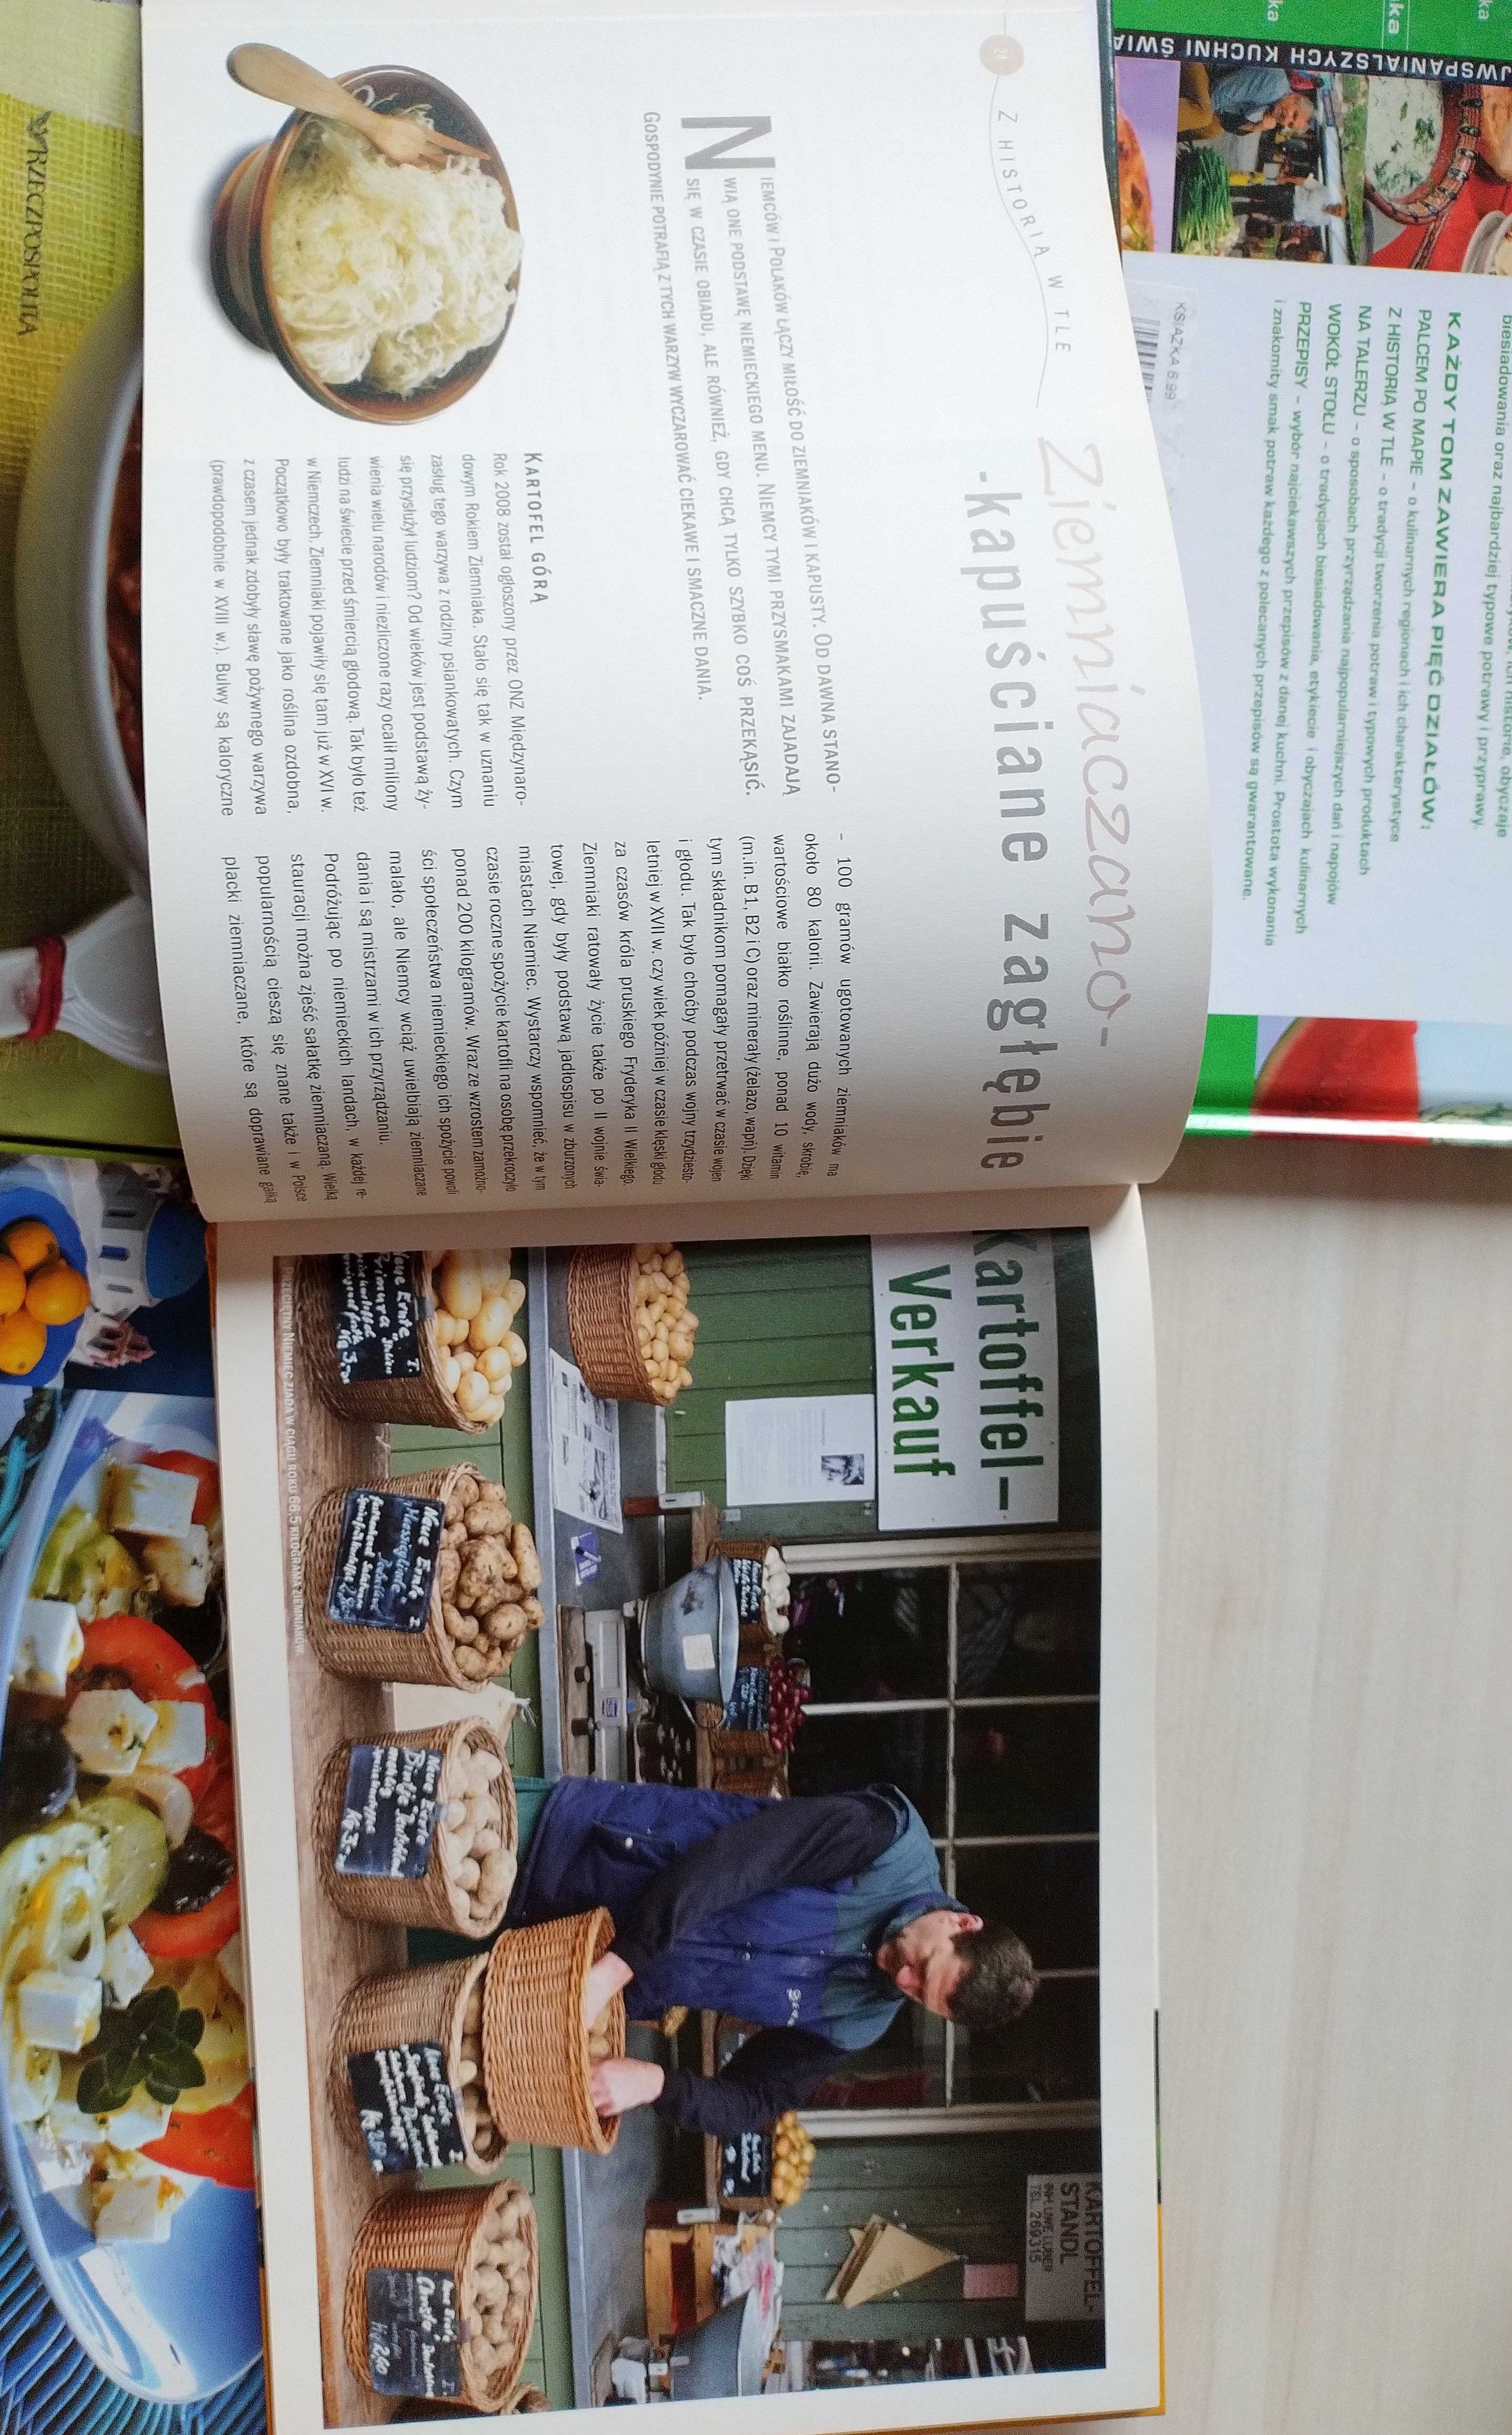 4 książki z serii Podróże kulinarne, kuchnia grecka, chińska, bułgarsk